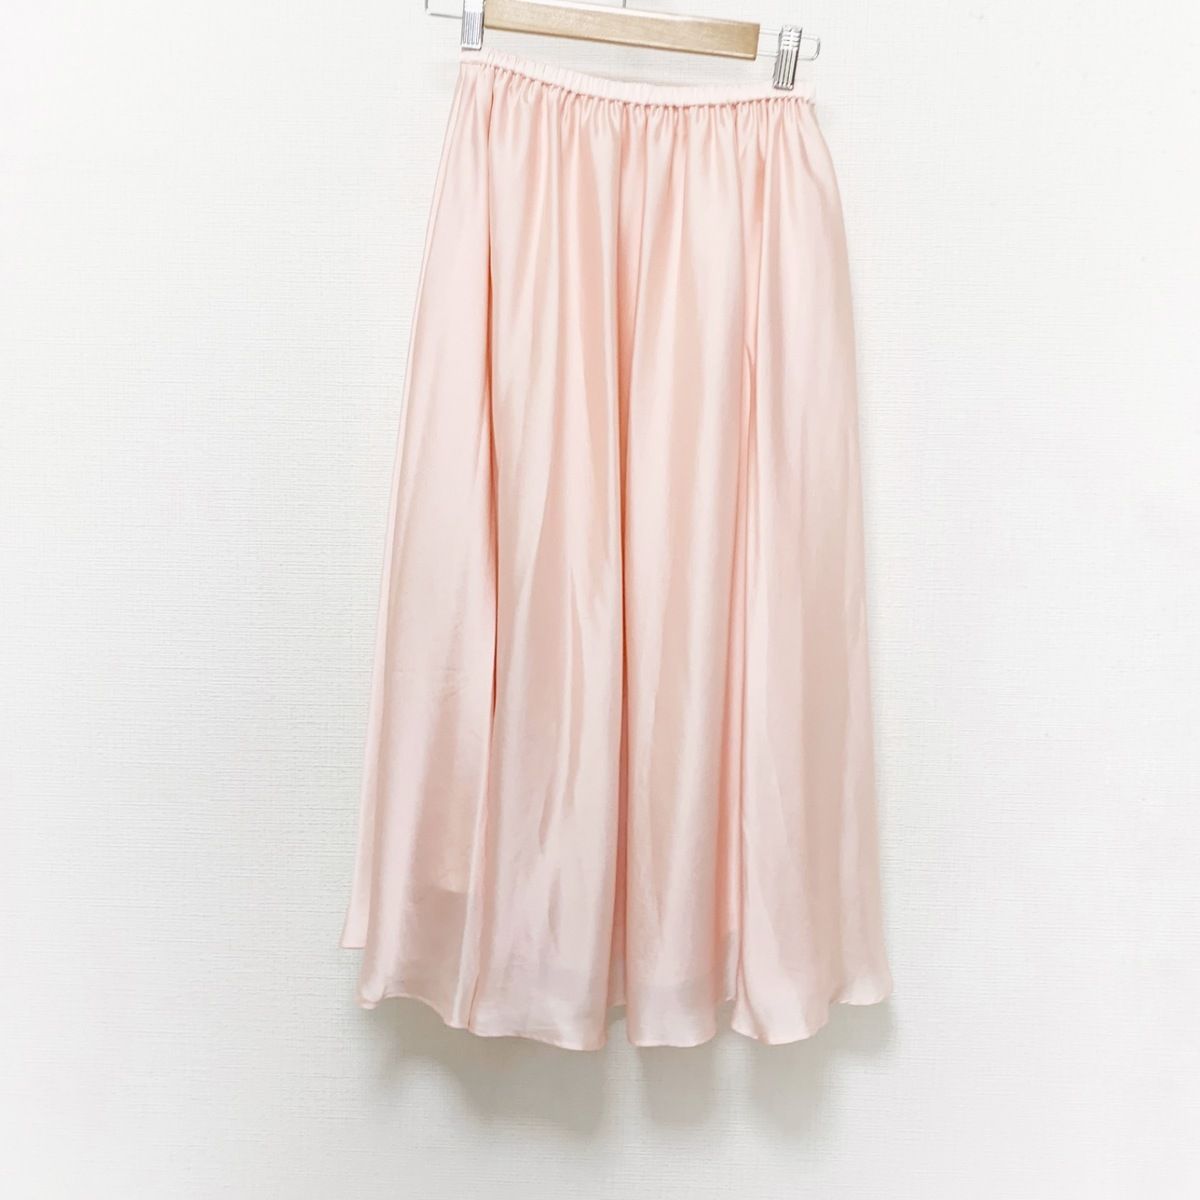 yori(ヨリ) ロングスカート サイズ36 S レディース美品 - ライトピンク ウエストゴム